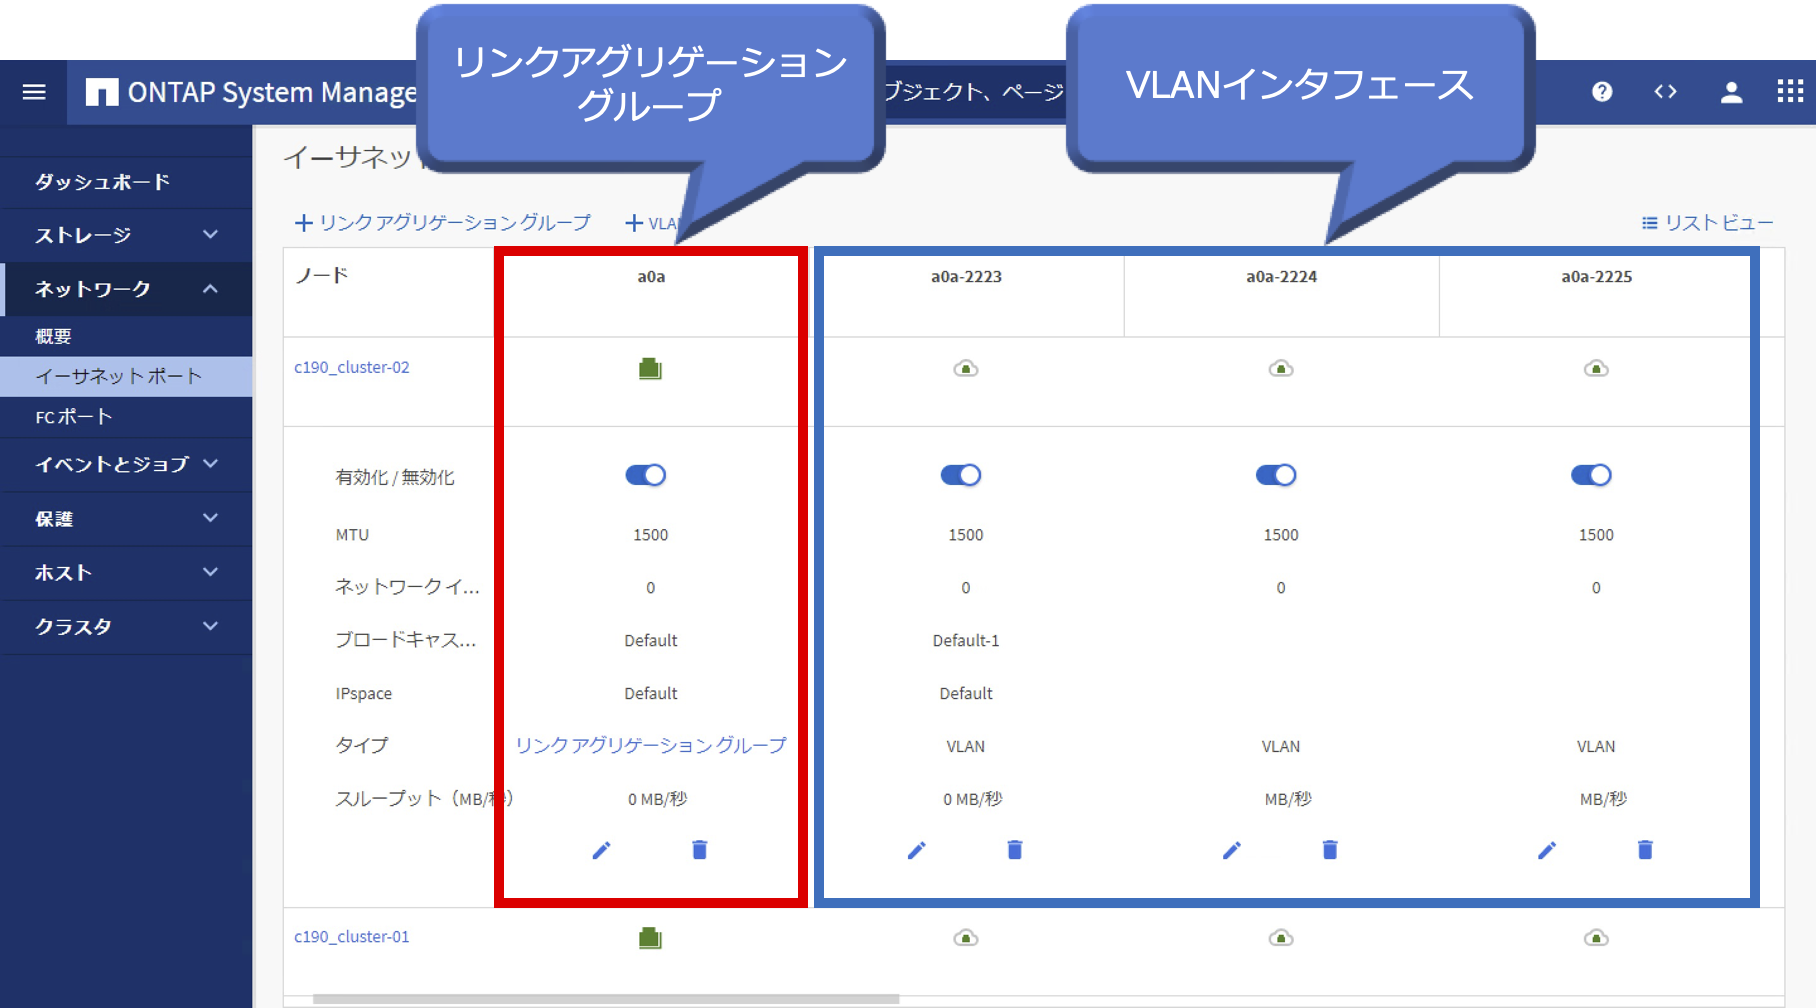 08_VLANインタフェース構成例.png